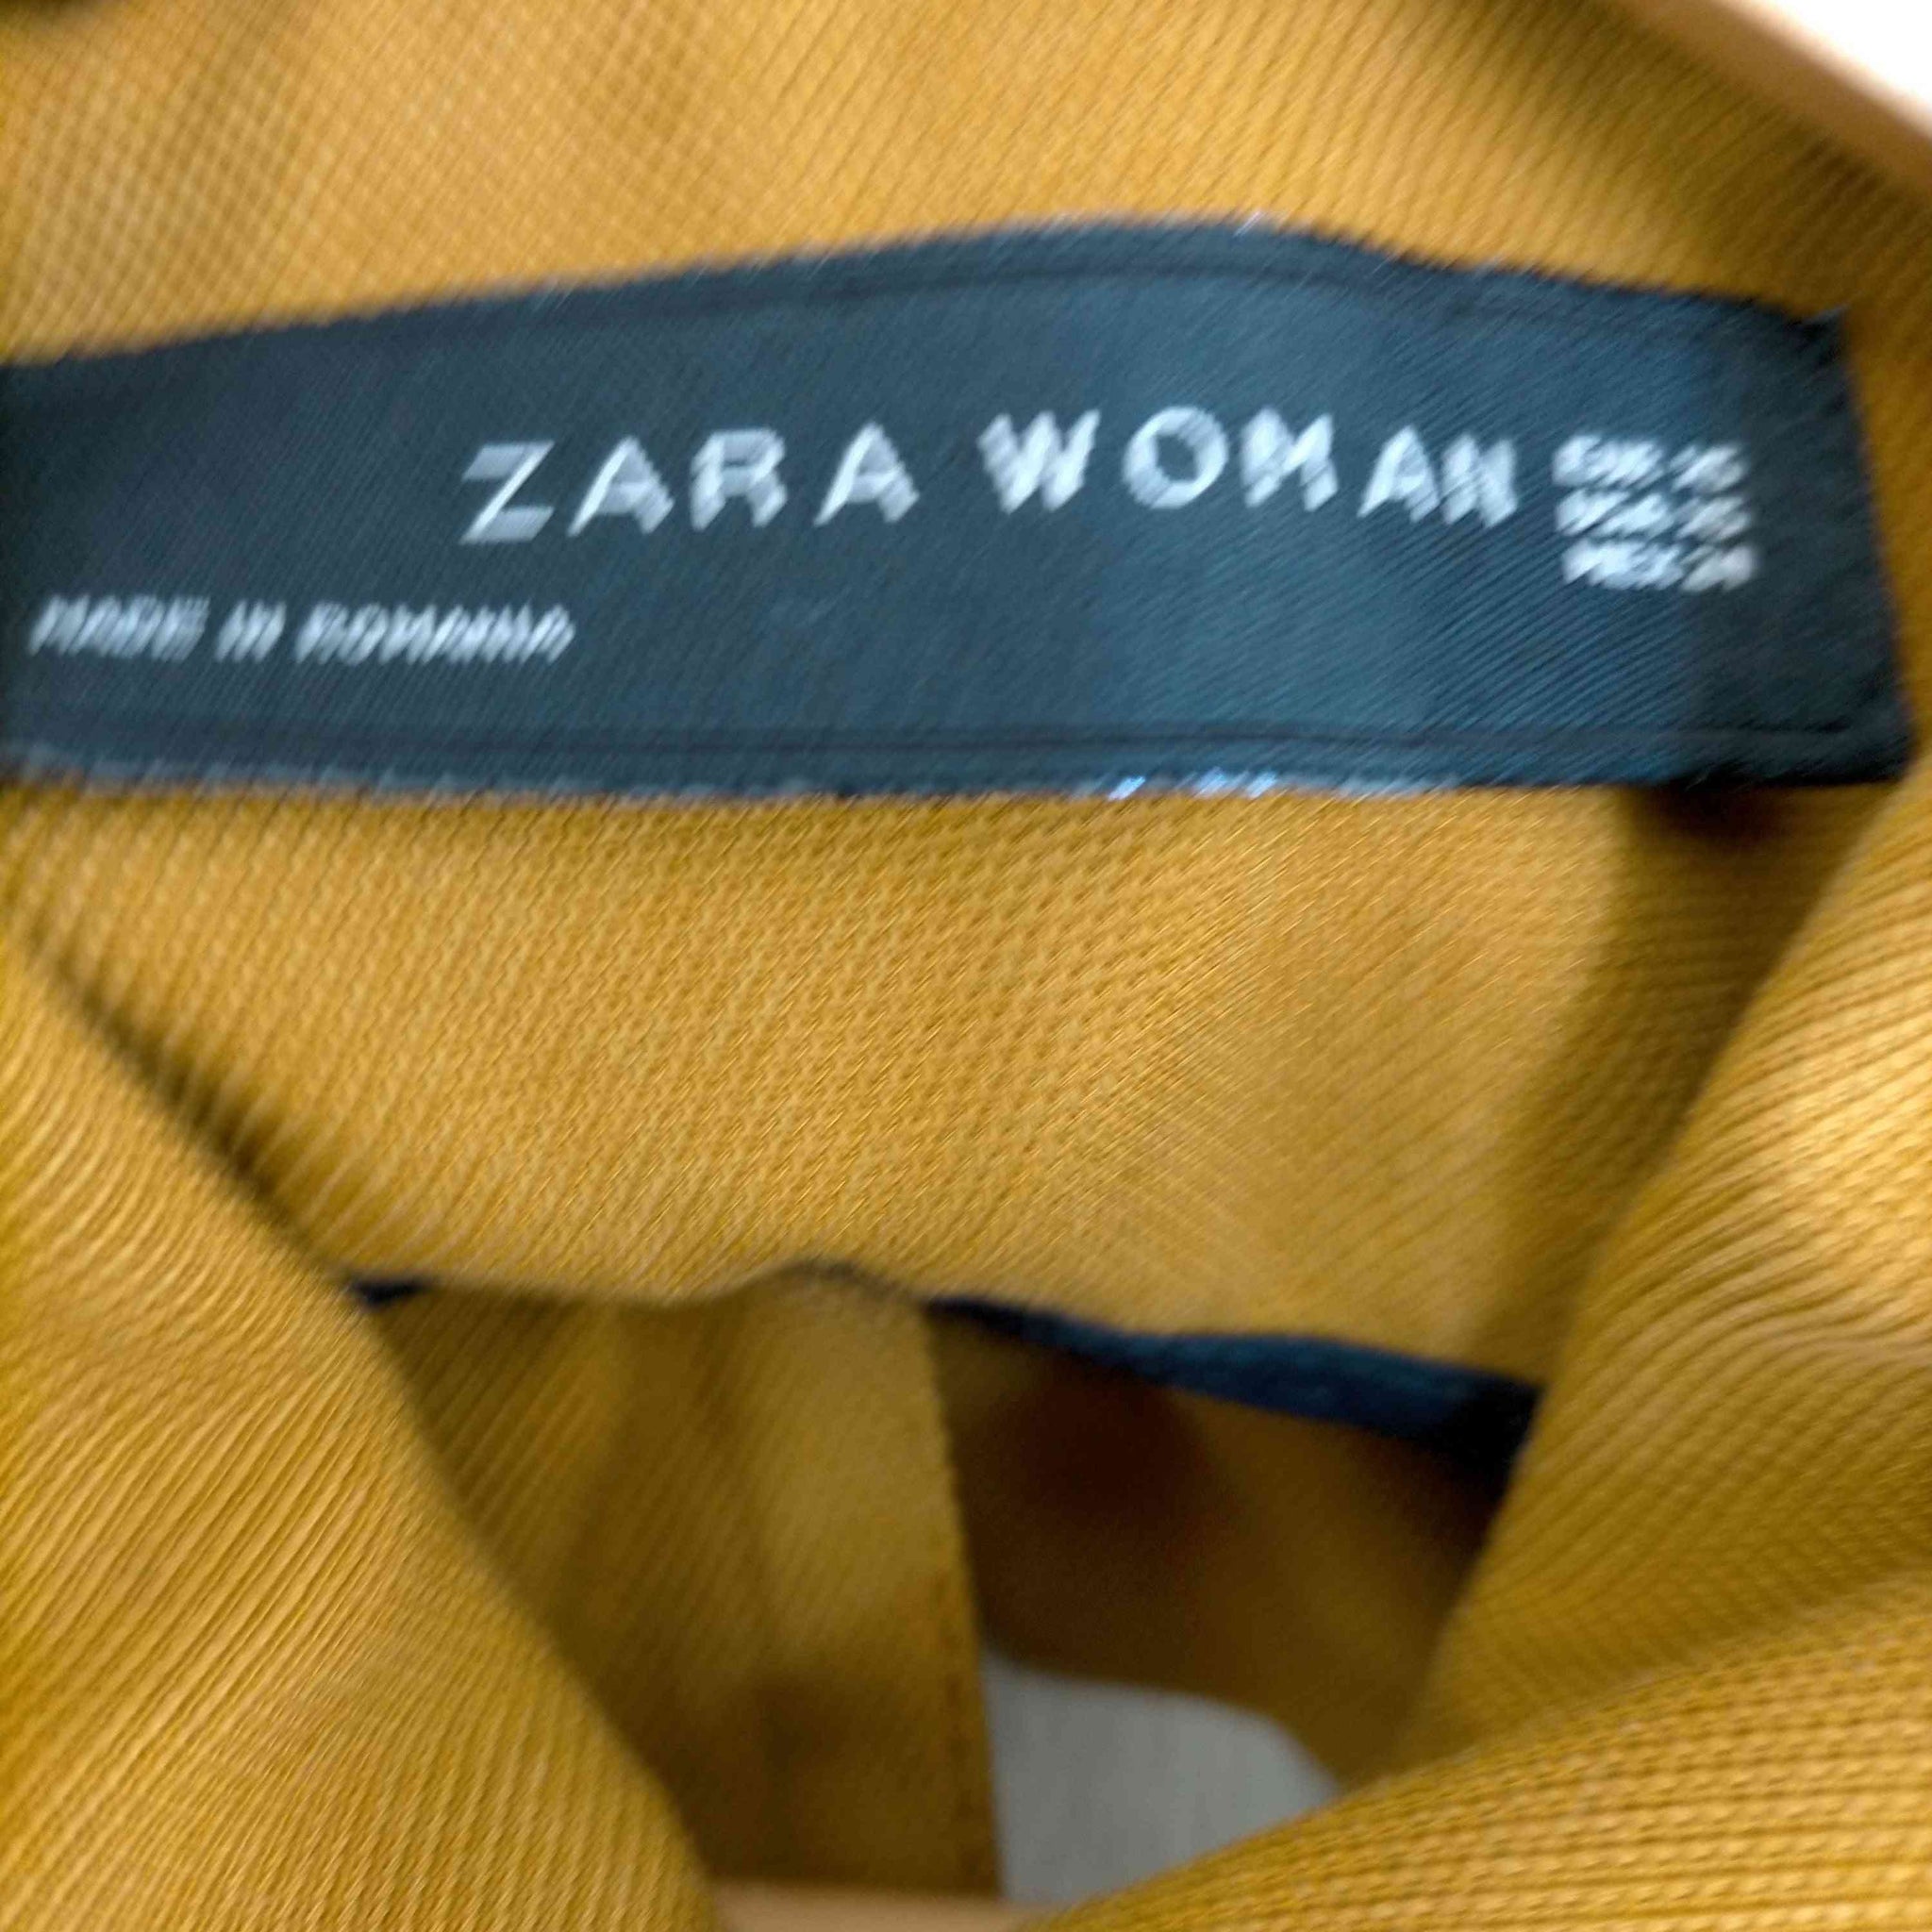 ZARA WOMAN(ザラ ウーマン)レイヤードジャケット